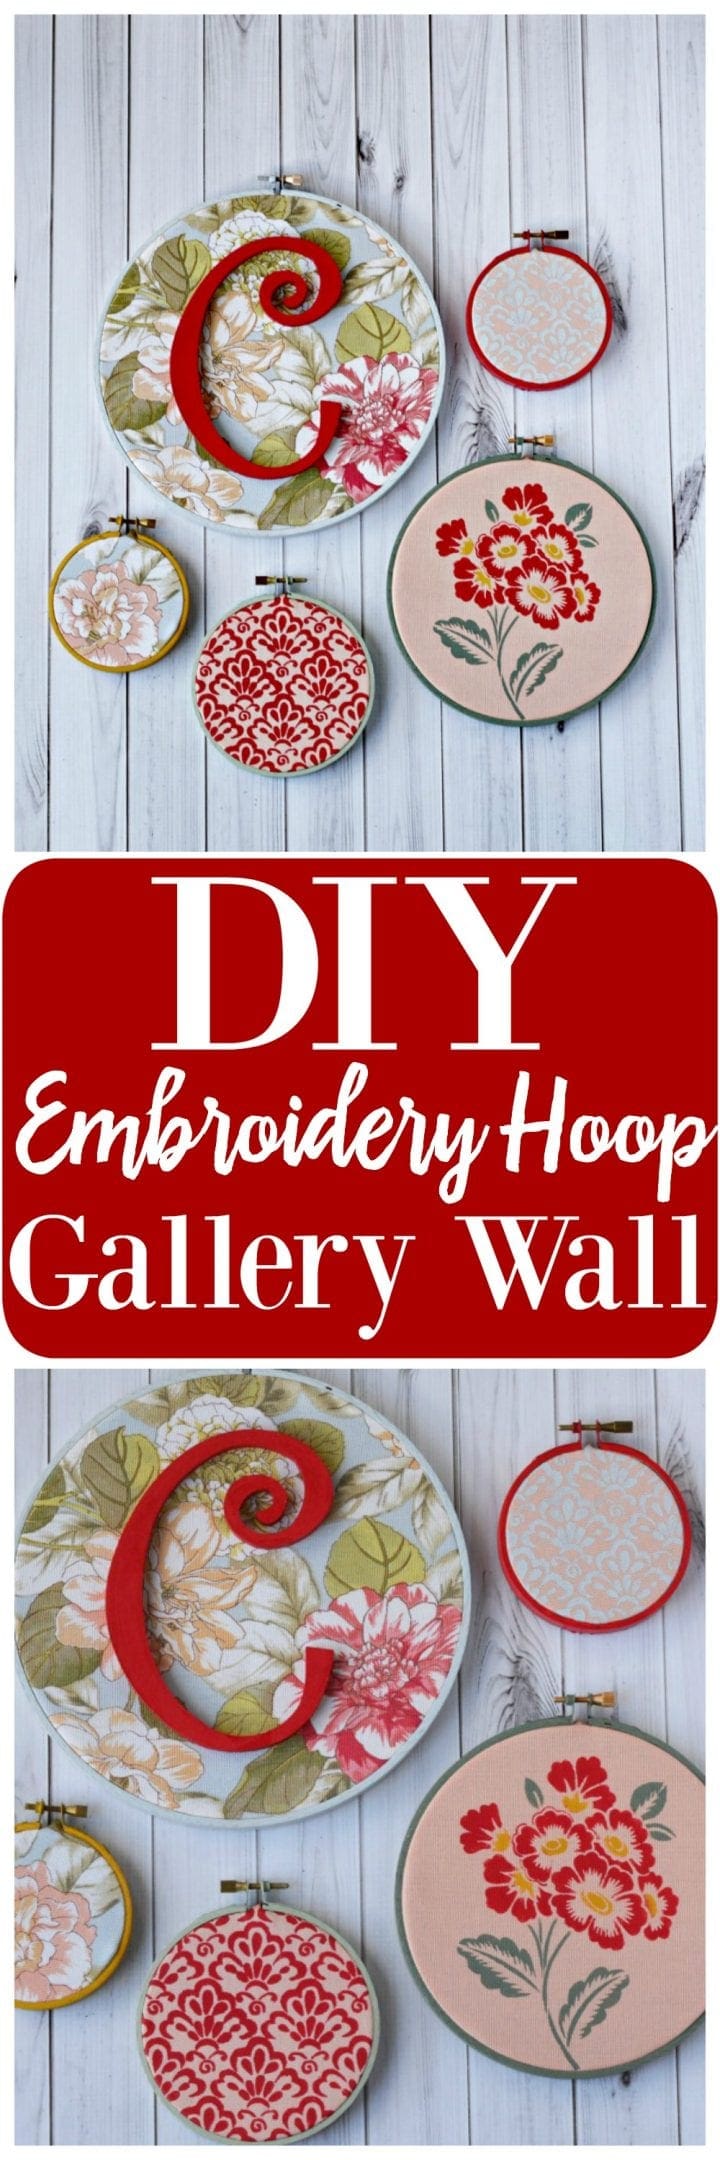 DIY Embroidery Hoop Gallery Wall #WaverlyInspirations #InAWaverlyWorld